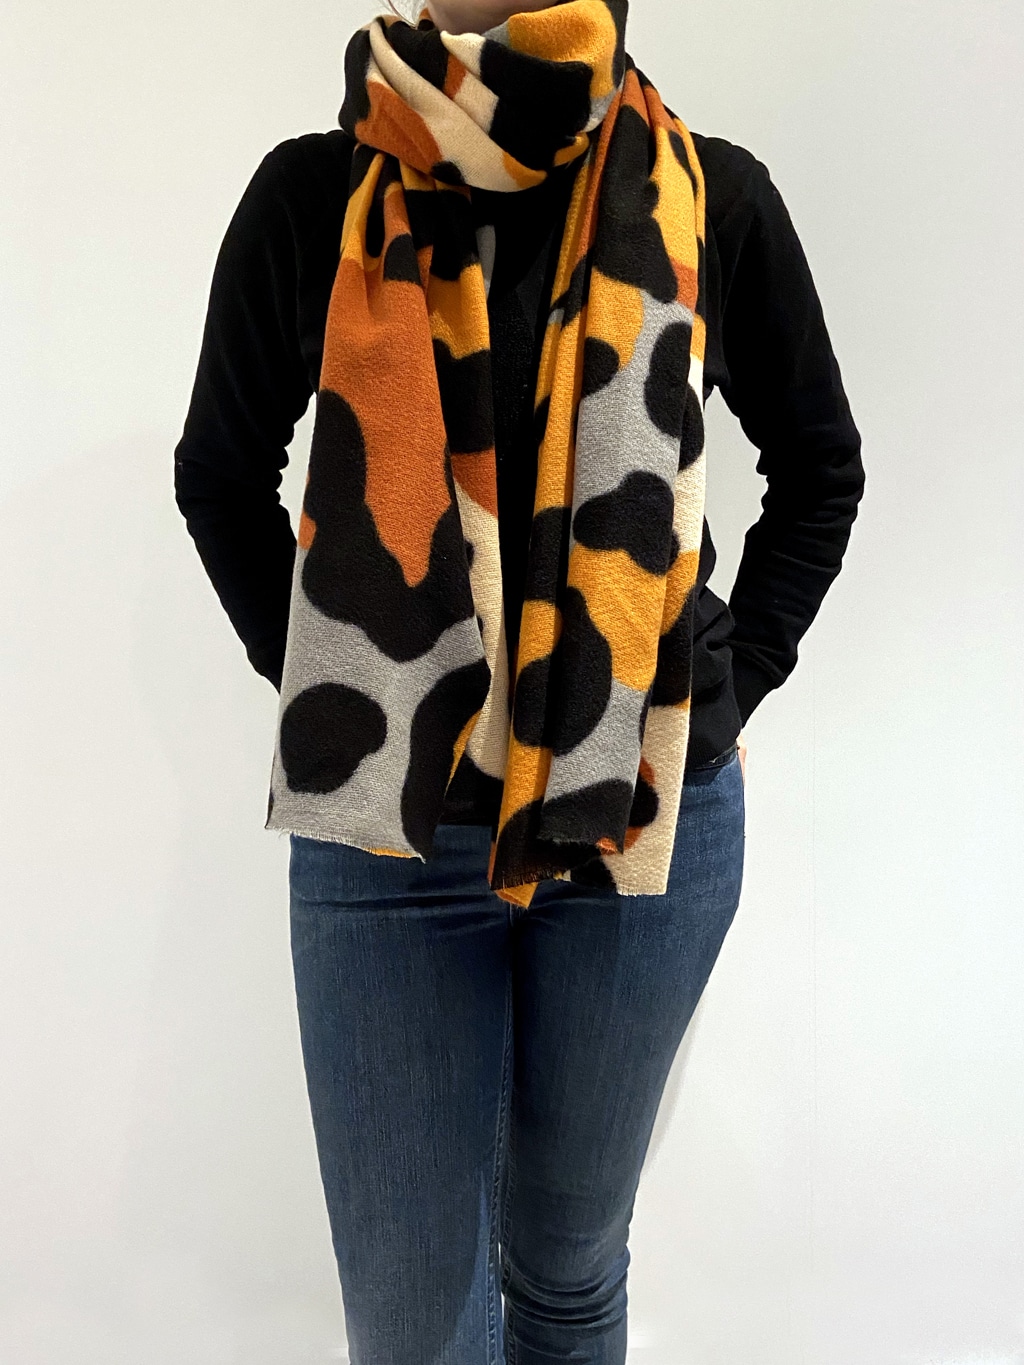 Giraffe print thick winter scarf